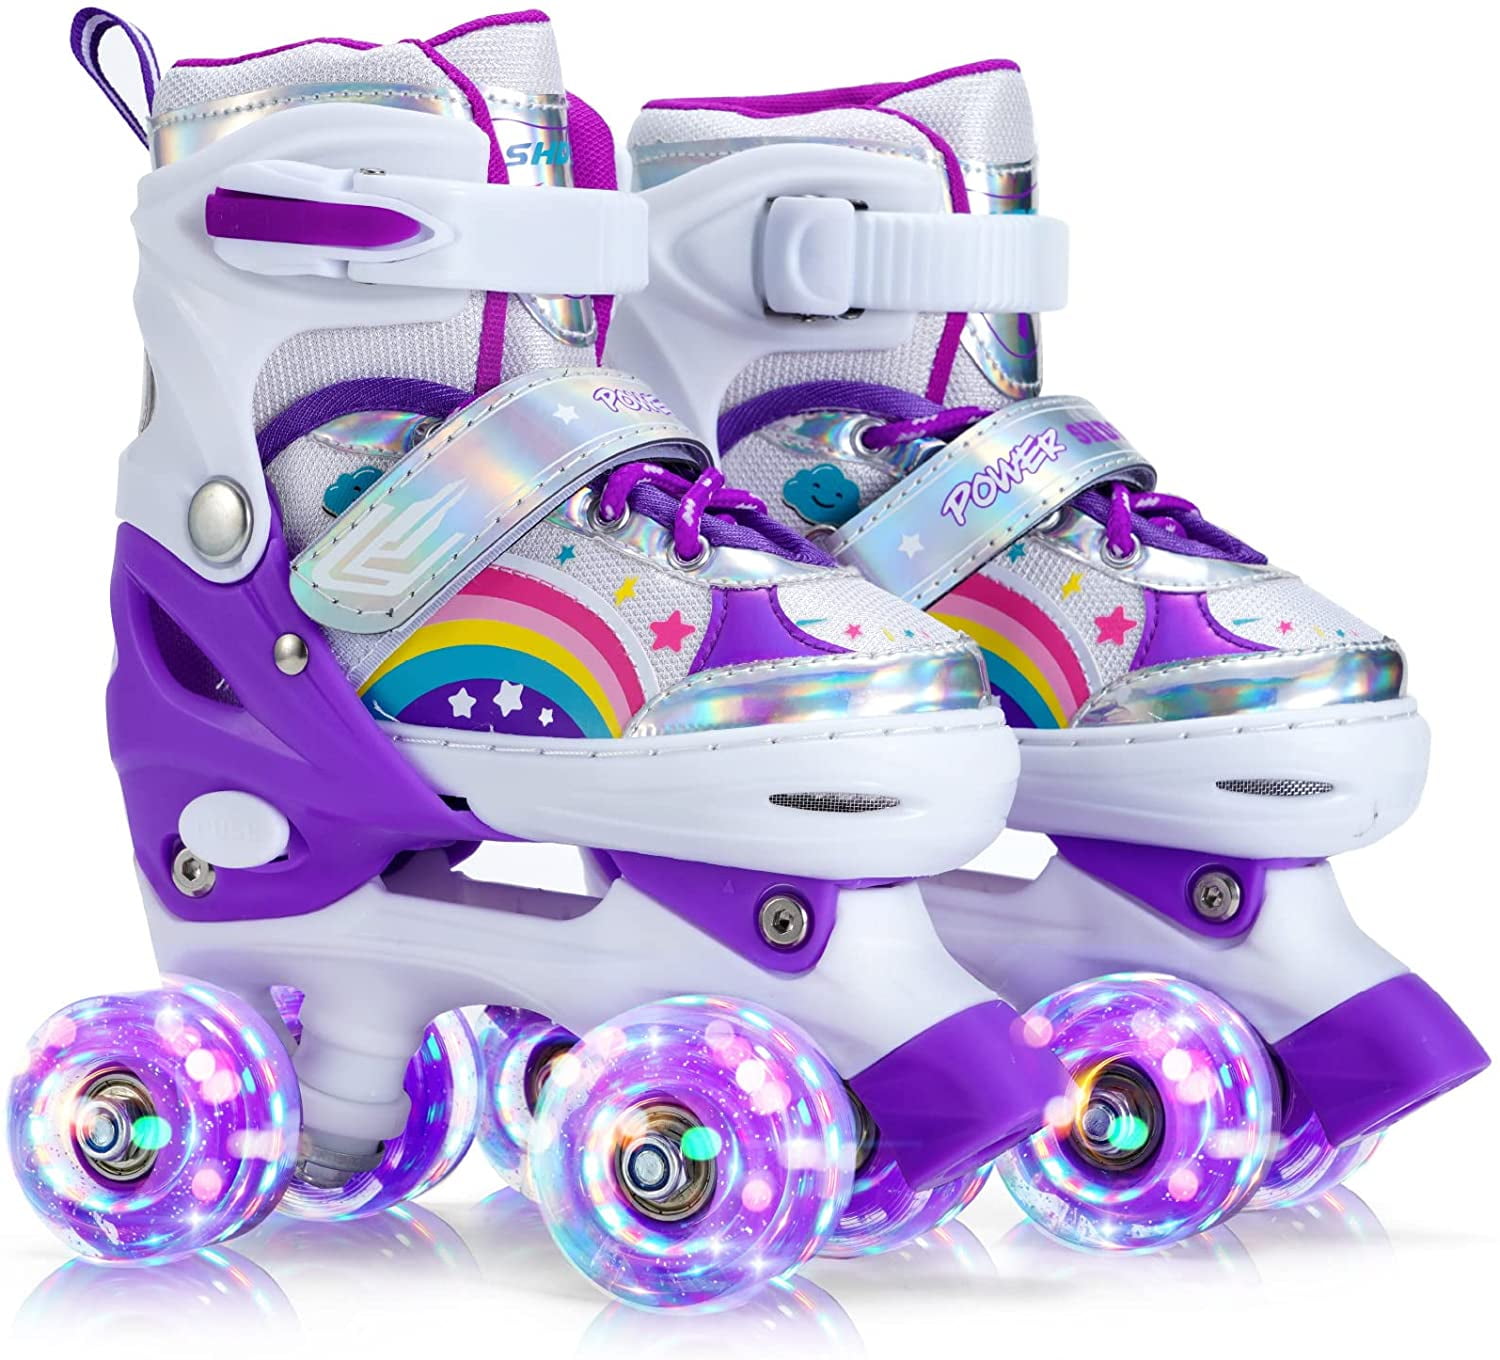 All 8 Wheels Illuminating. Kids Inline Skates for Girls Boys Beginners Adjustable